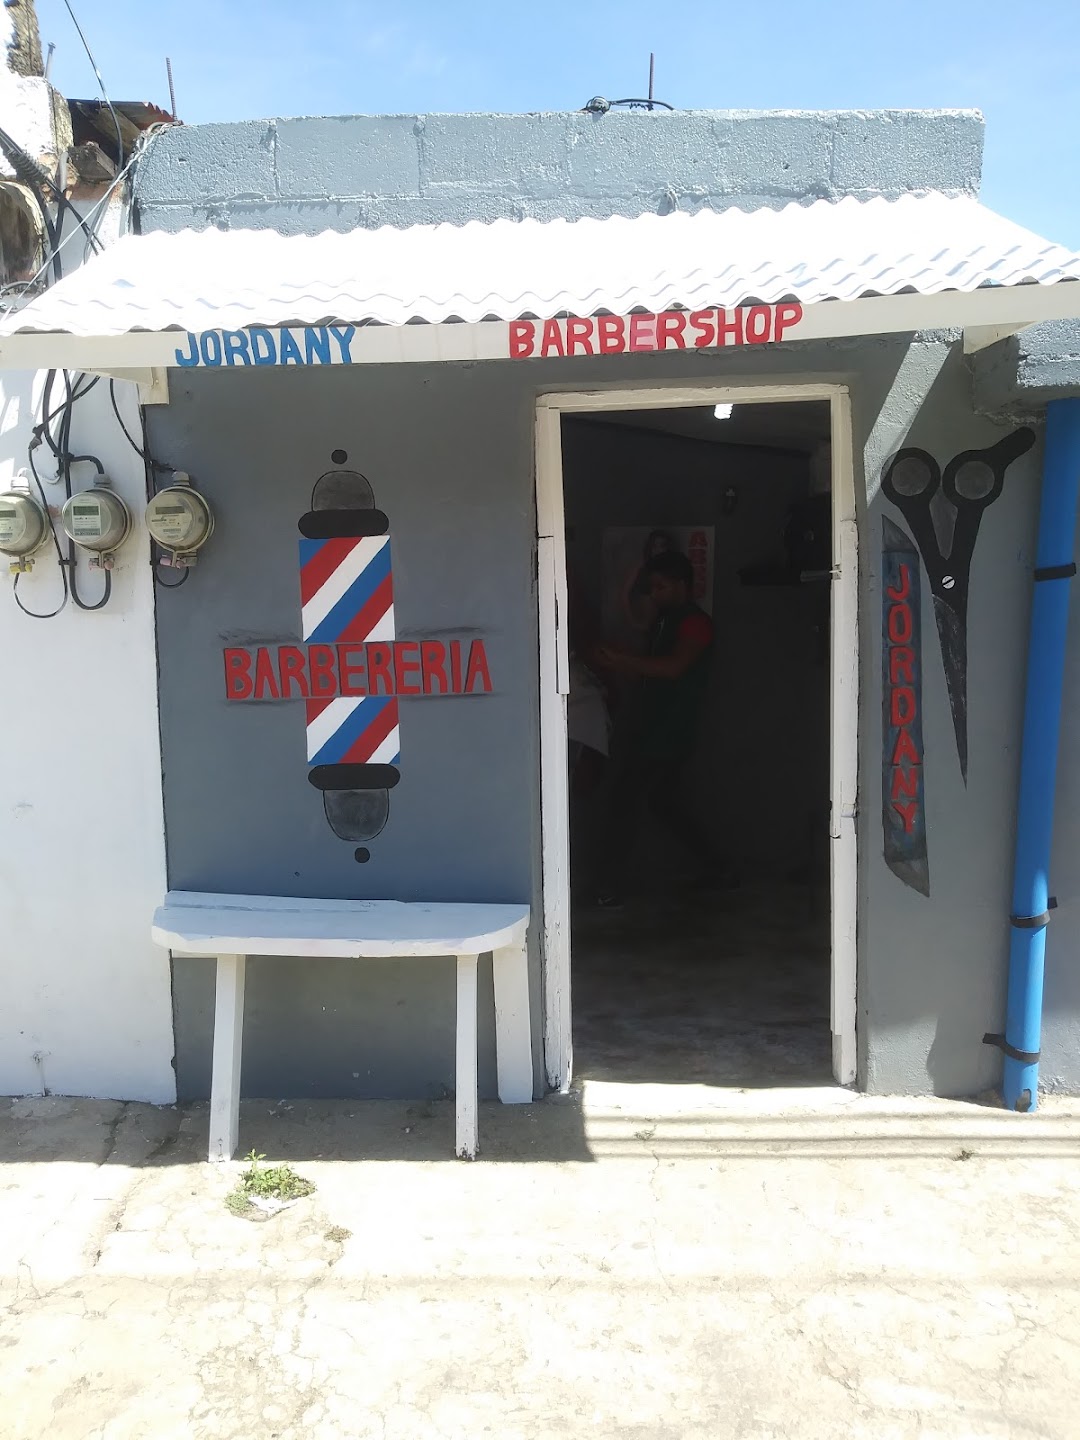 Jordany barbershop